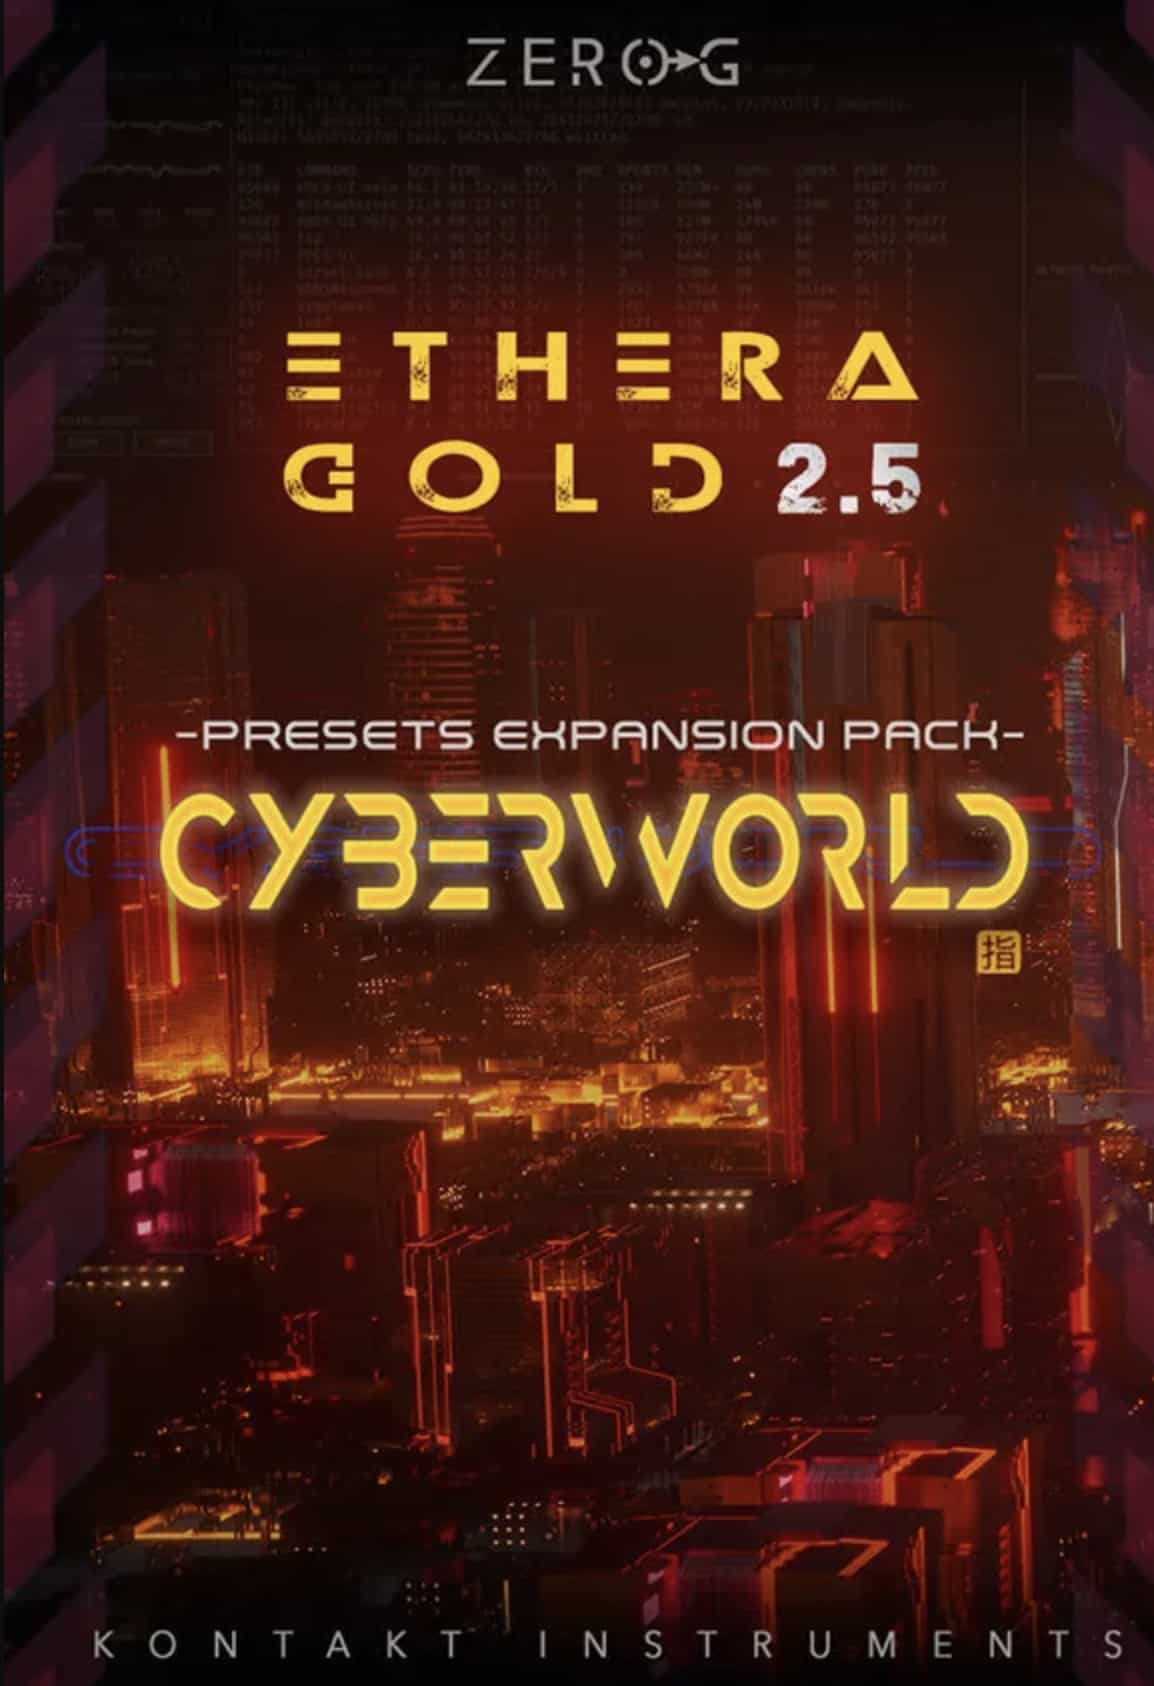 CyberWorld Ethera Gold 2.5 Expansion Pack